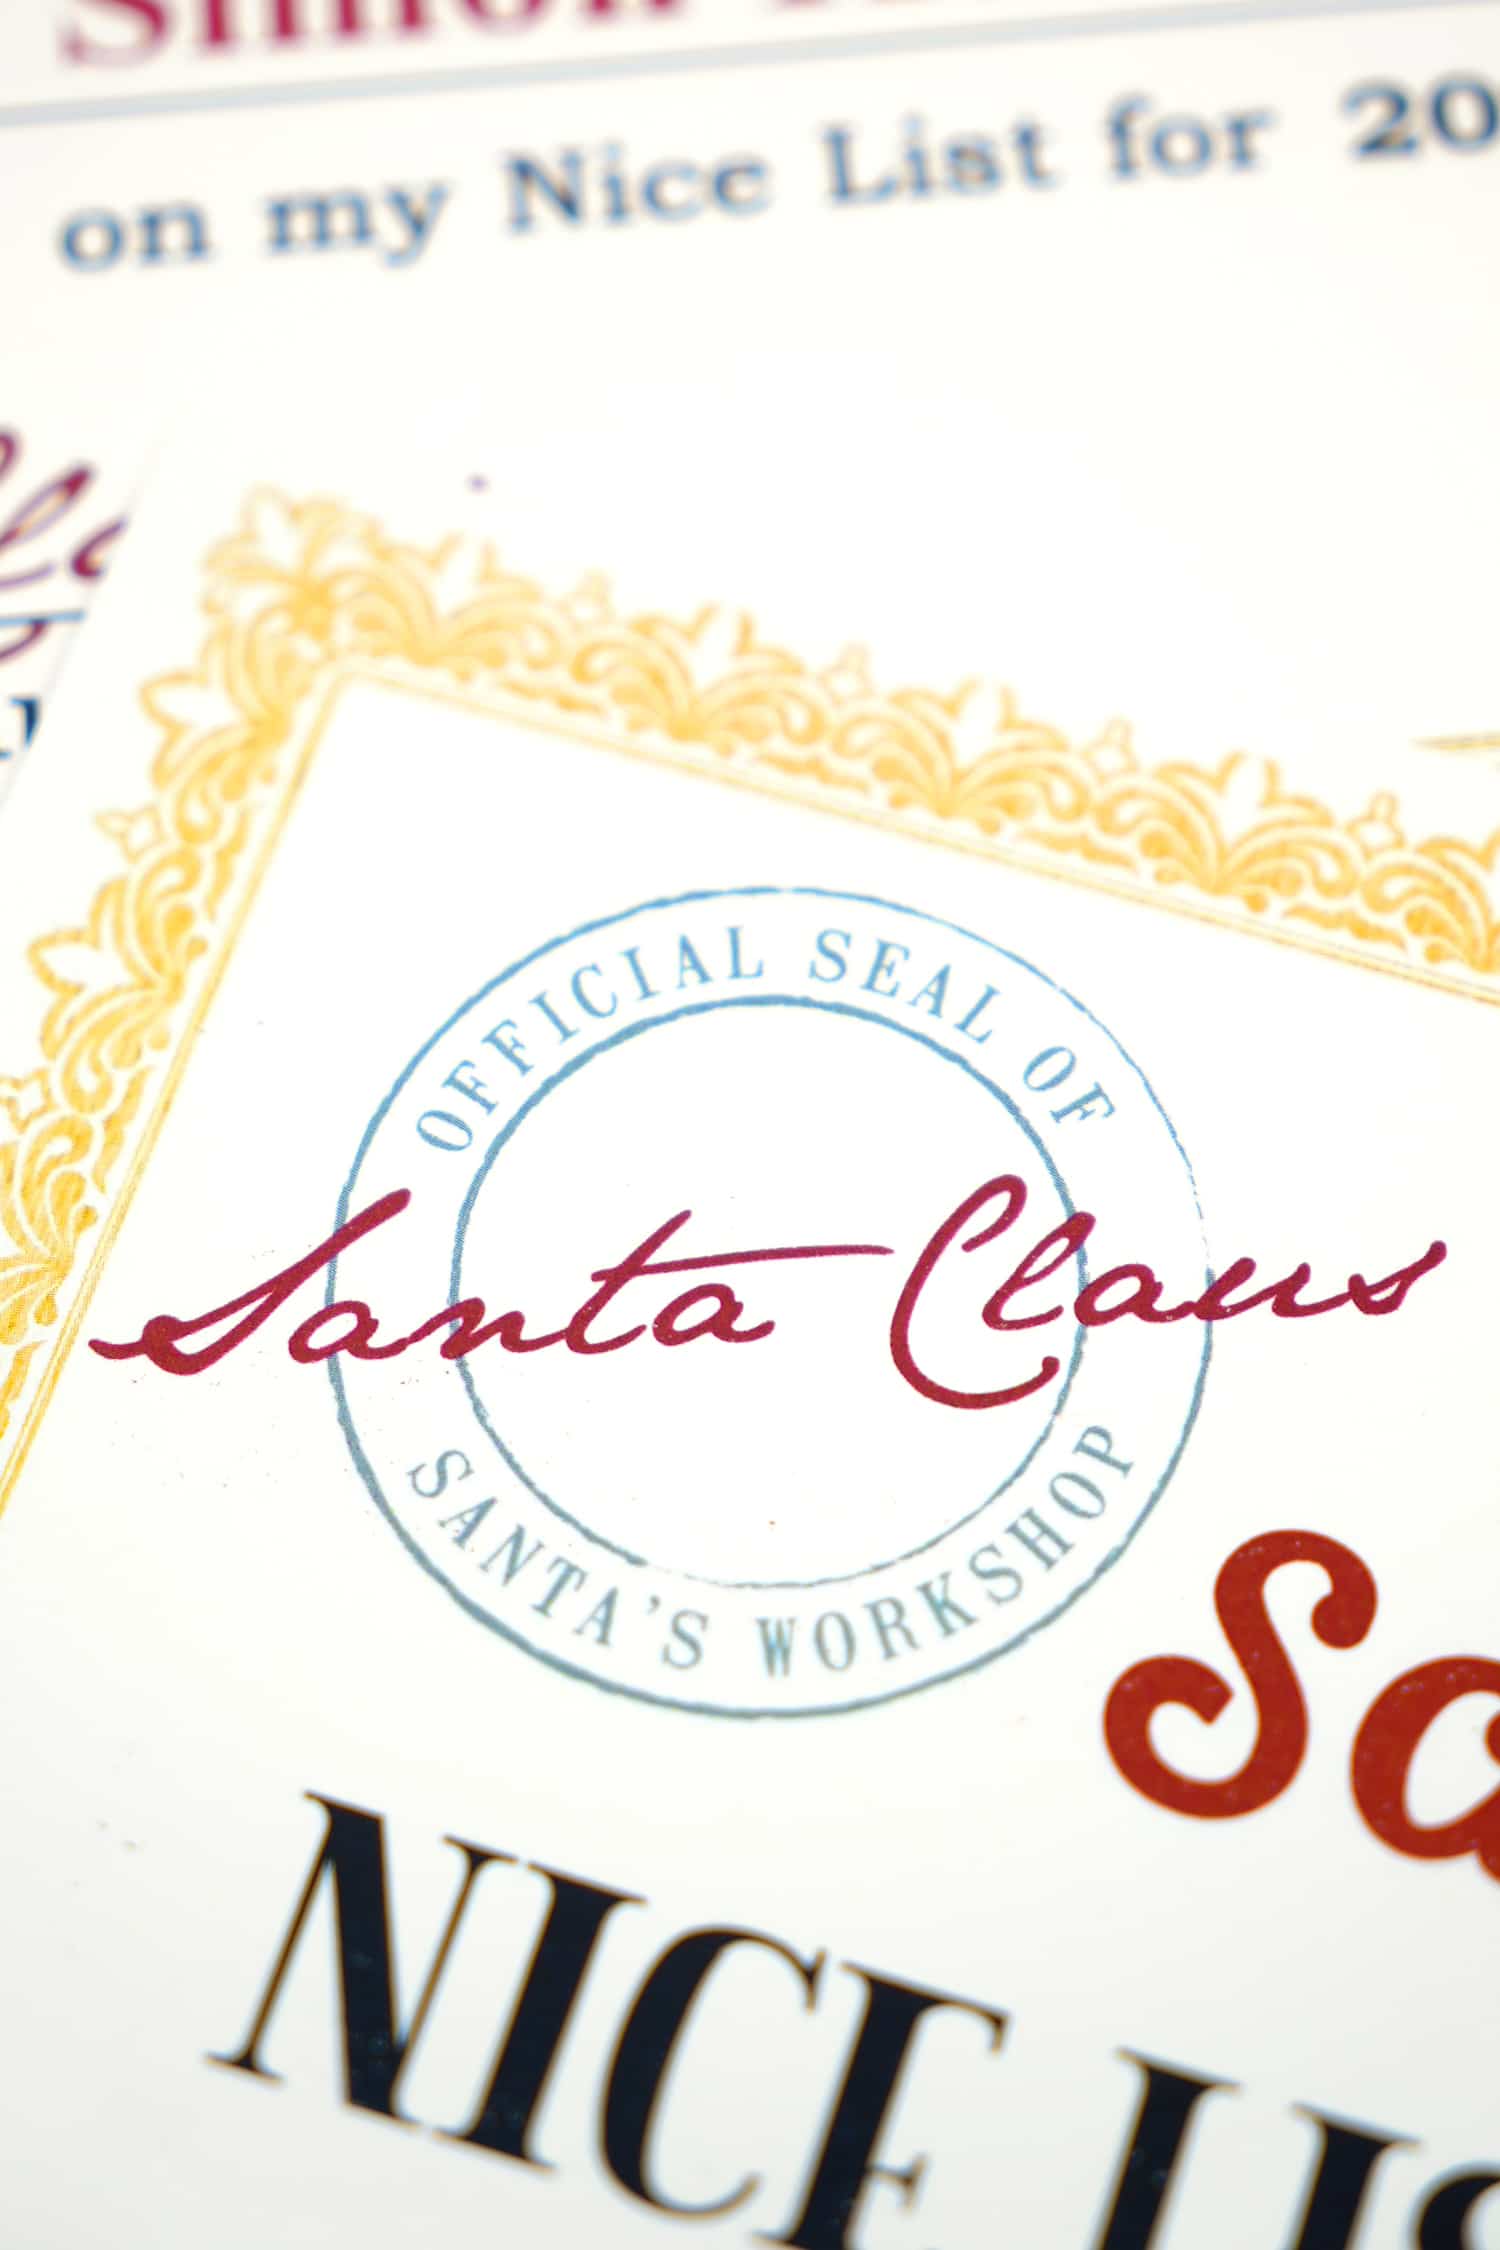 Close up of "Official Seal of Santa's Workshop" symbol on free printable Santa's Nice List certificate